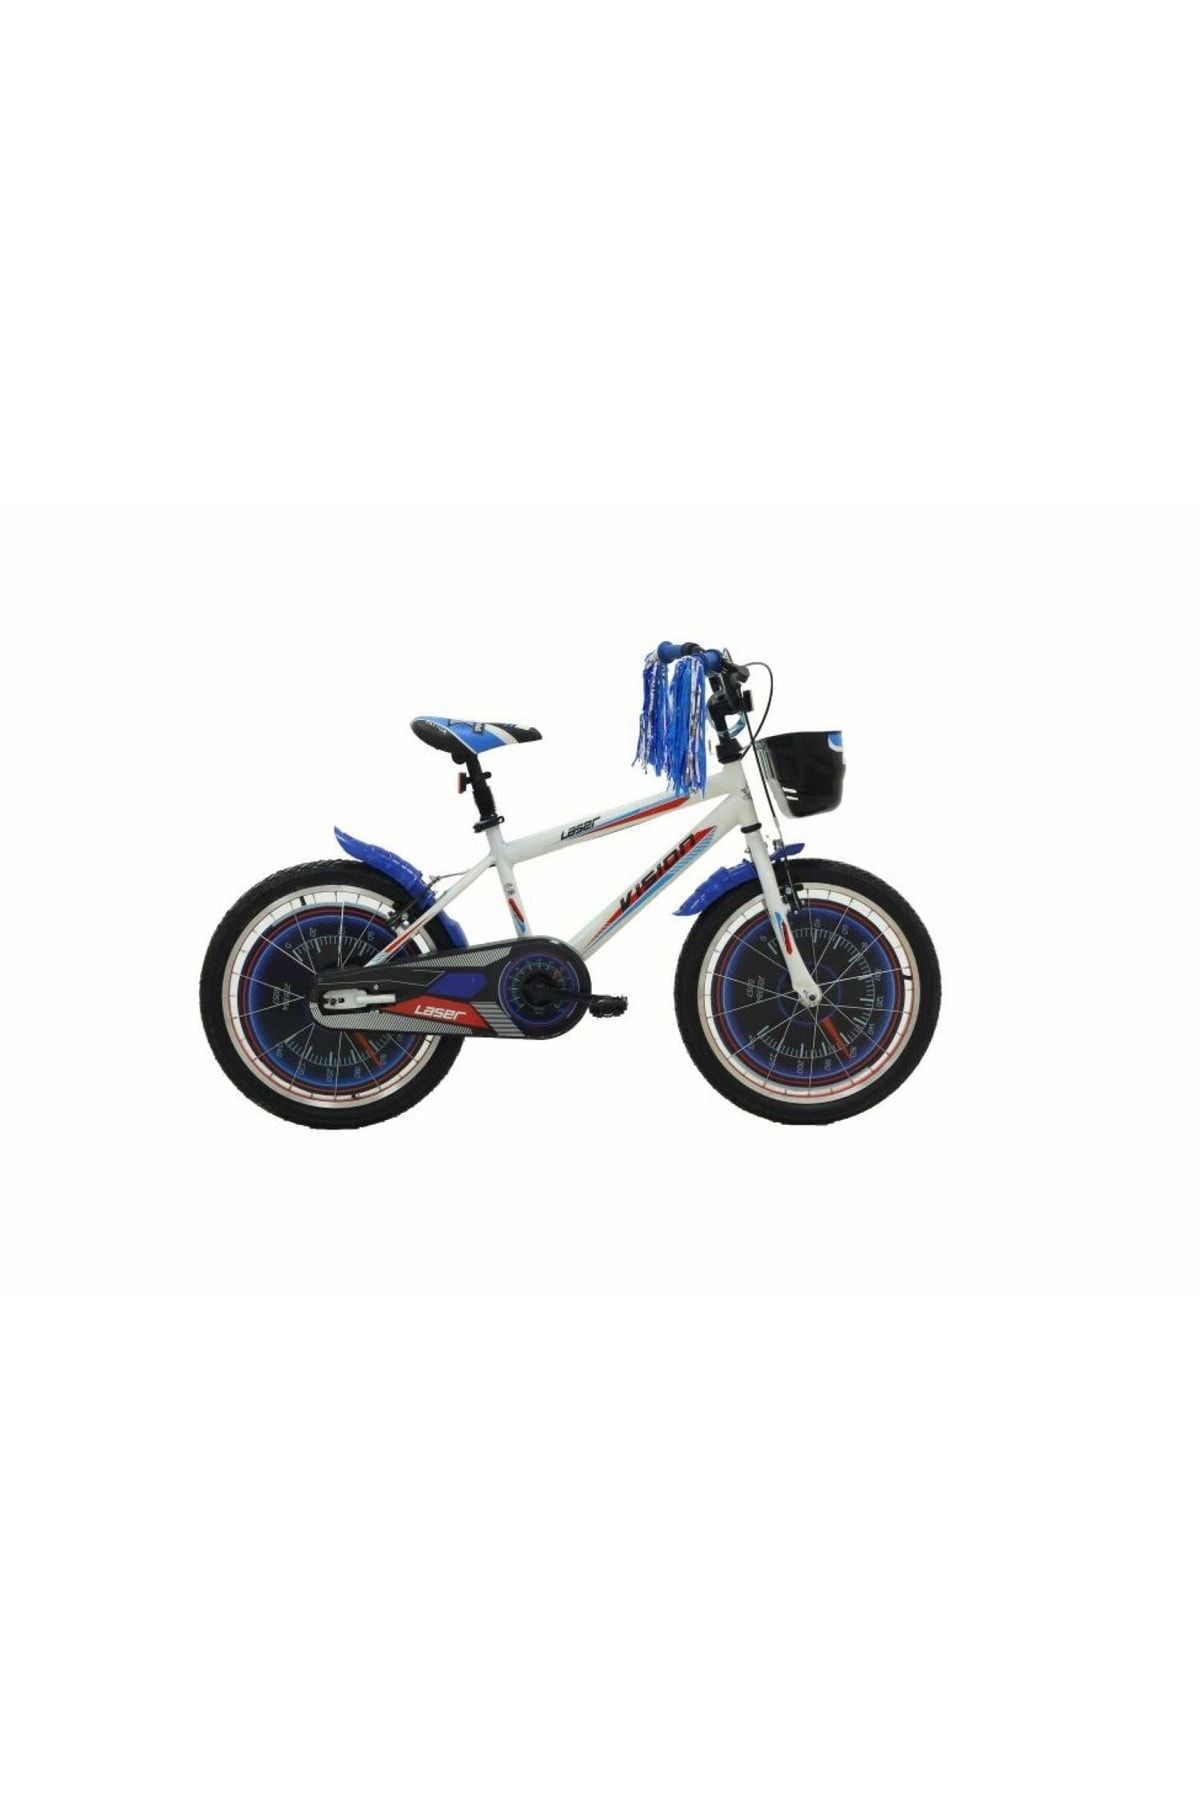 Vision Belderia Laser 16" Jant Vitessiz V-fren Beyaz-mavi Çocuk Bisikleti